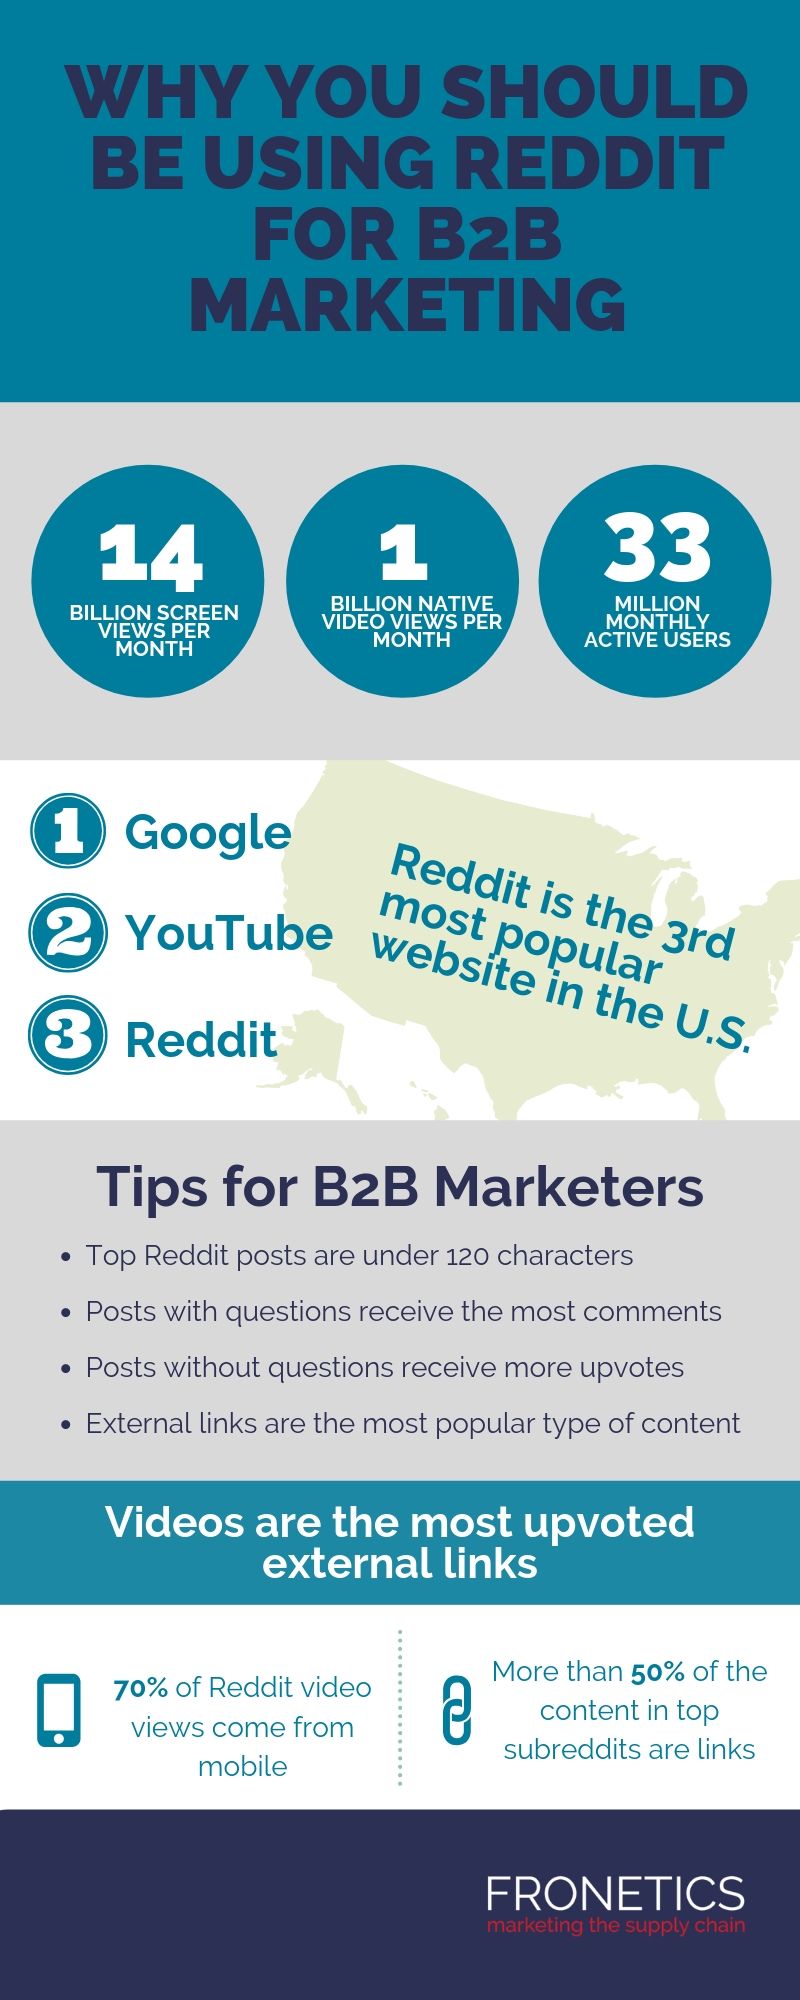 Reddit for B2B marketing